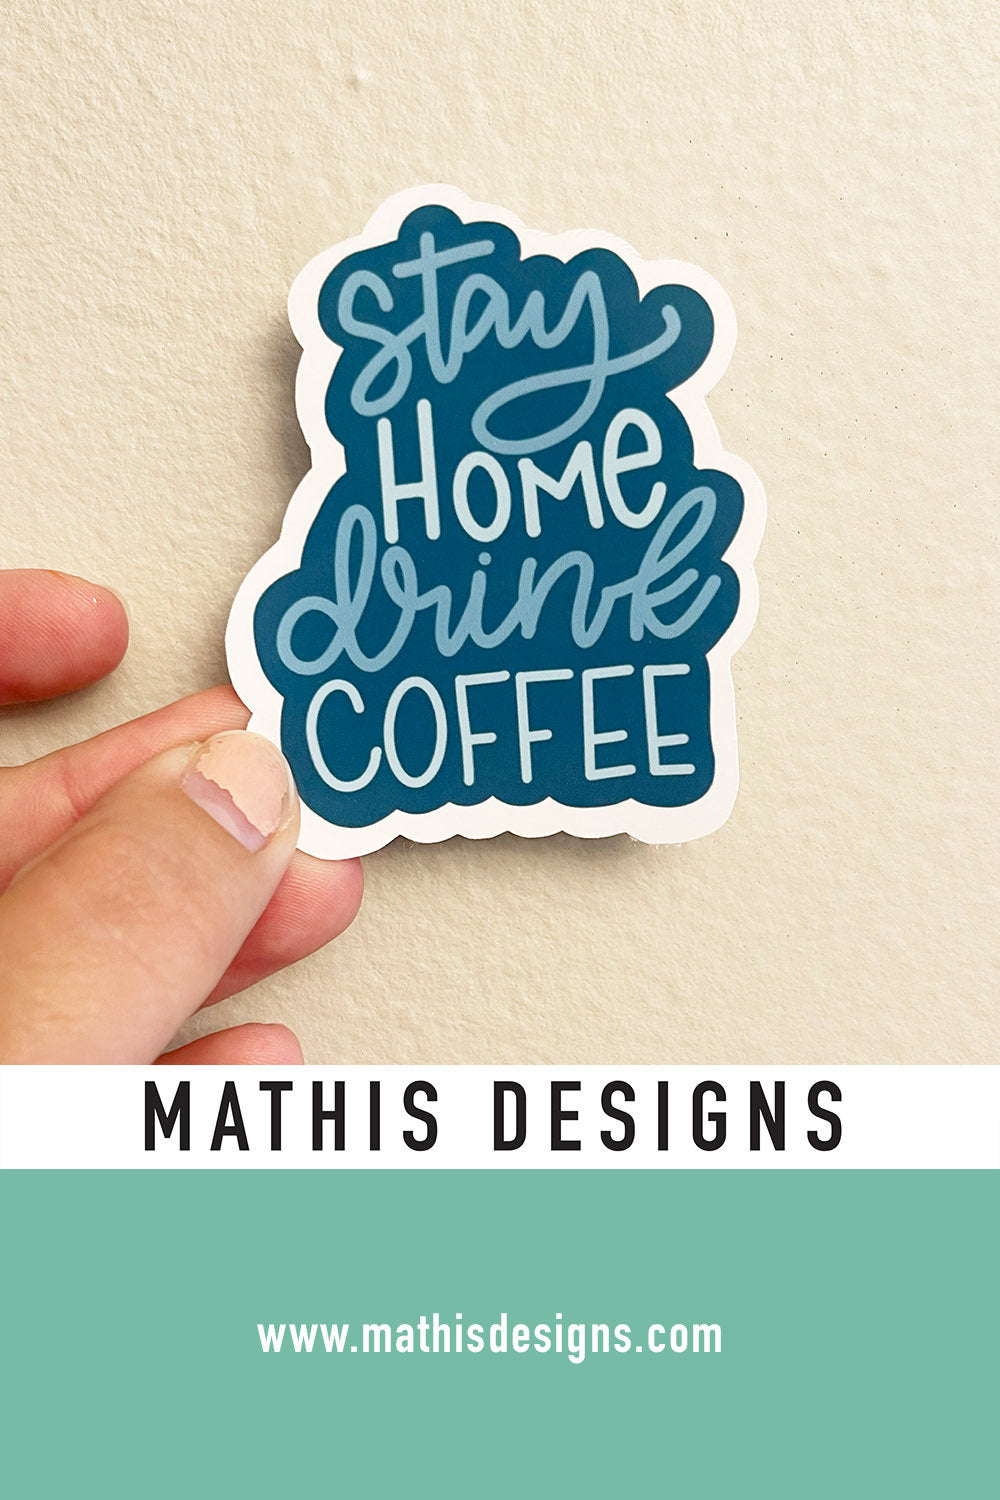 Stay Home Drink Coffee Sticker, Drink Coffee Vinyl Sticker, Gift